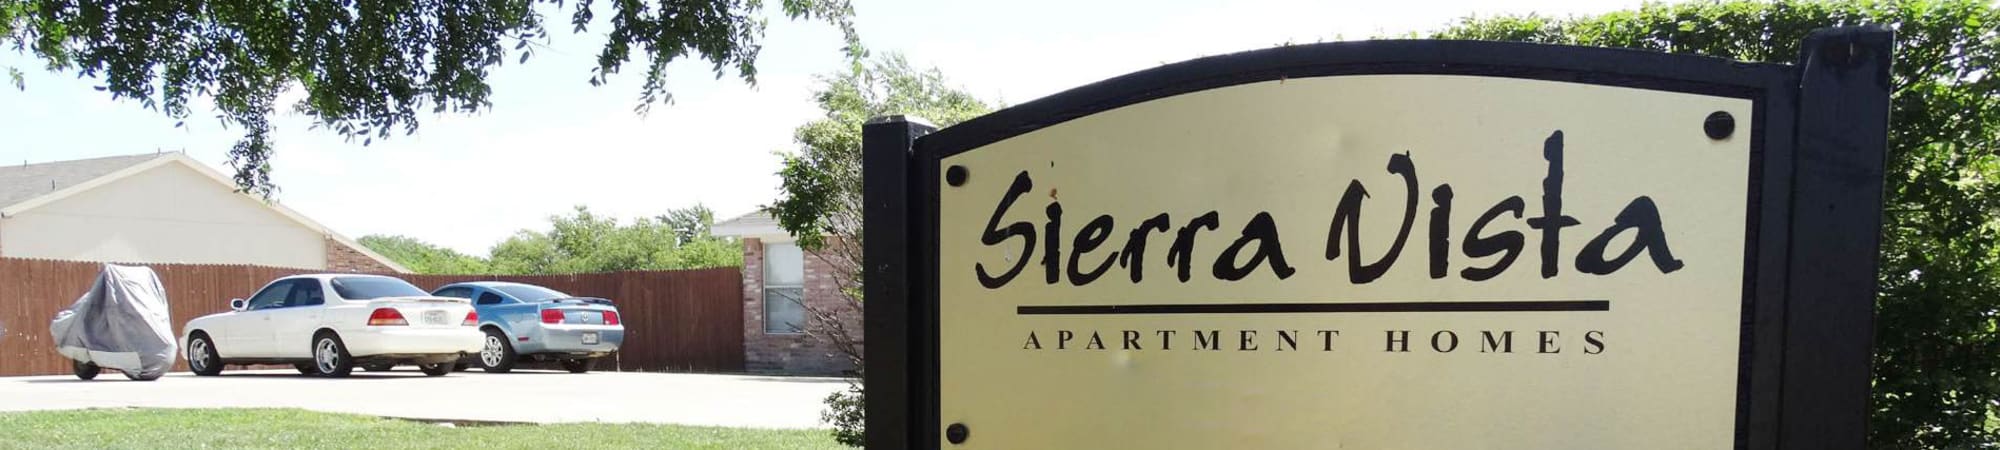 Schedule a tour of Sierra Vista Apartments in Midlothian, Texas